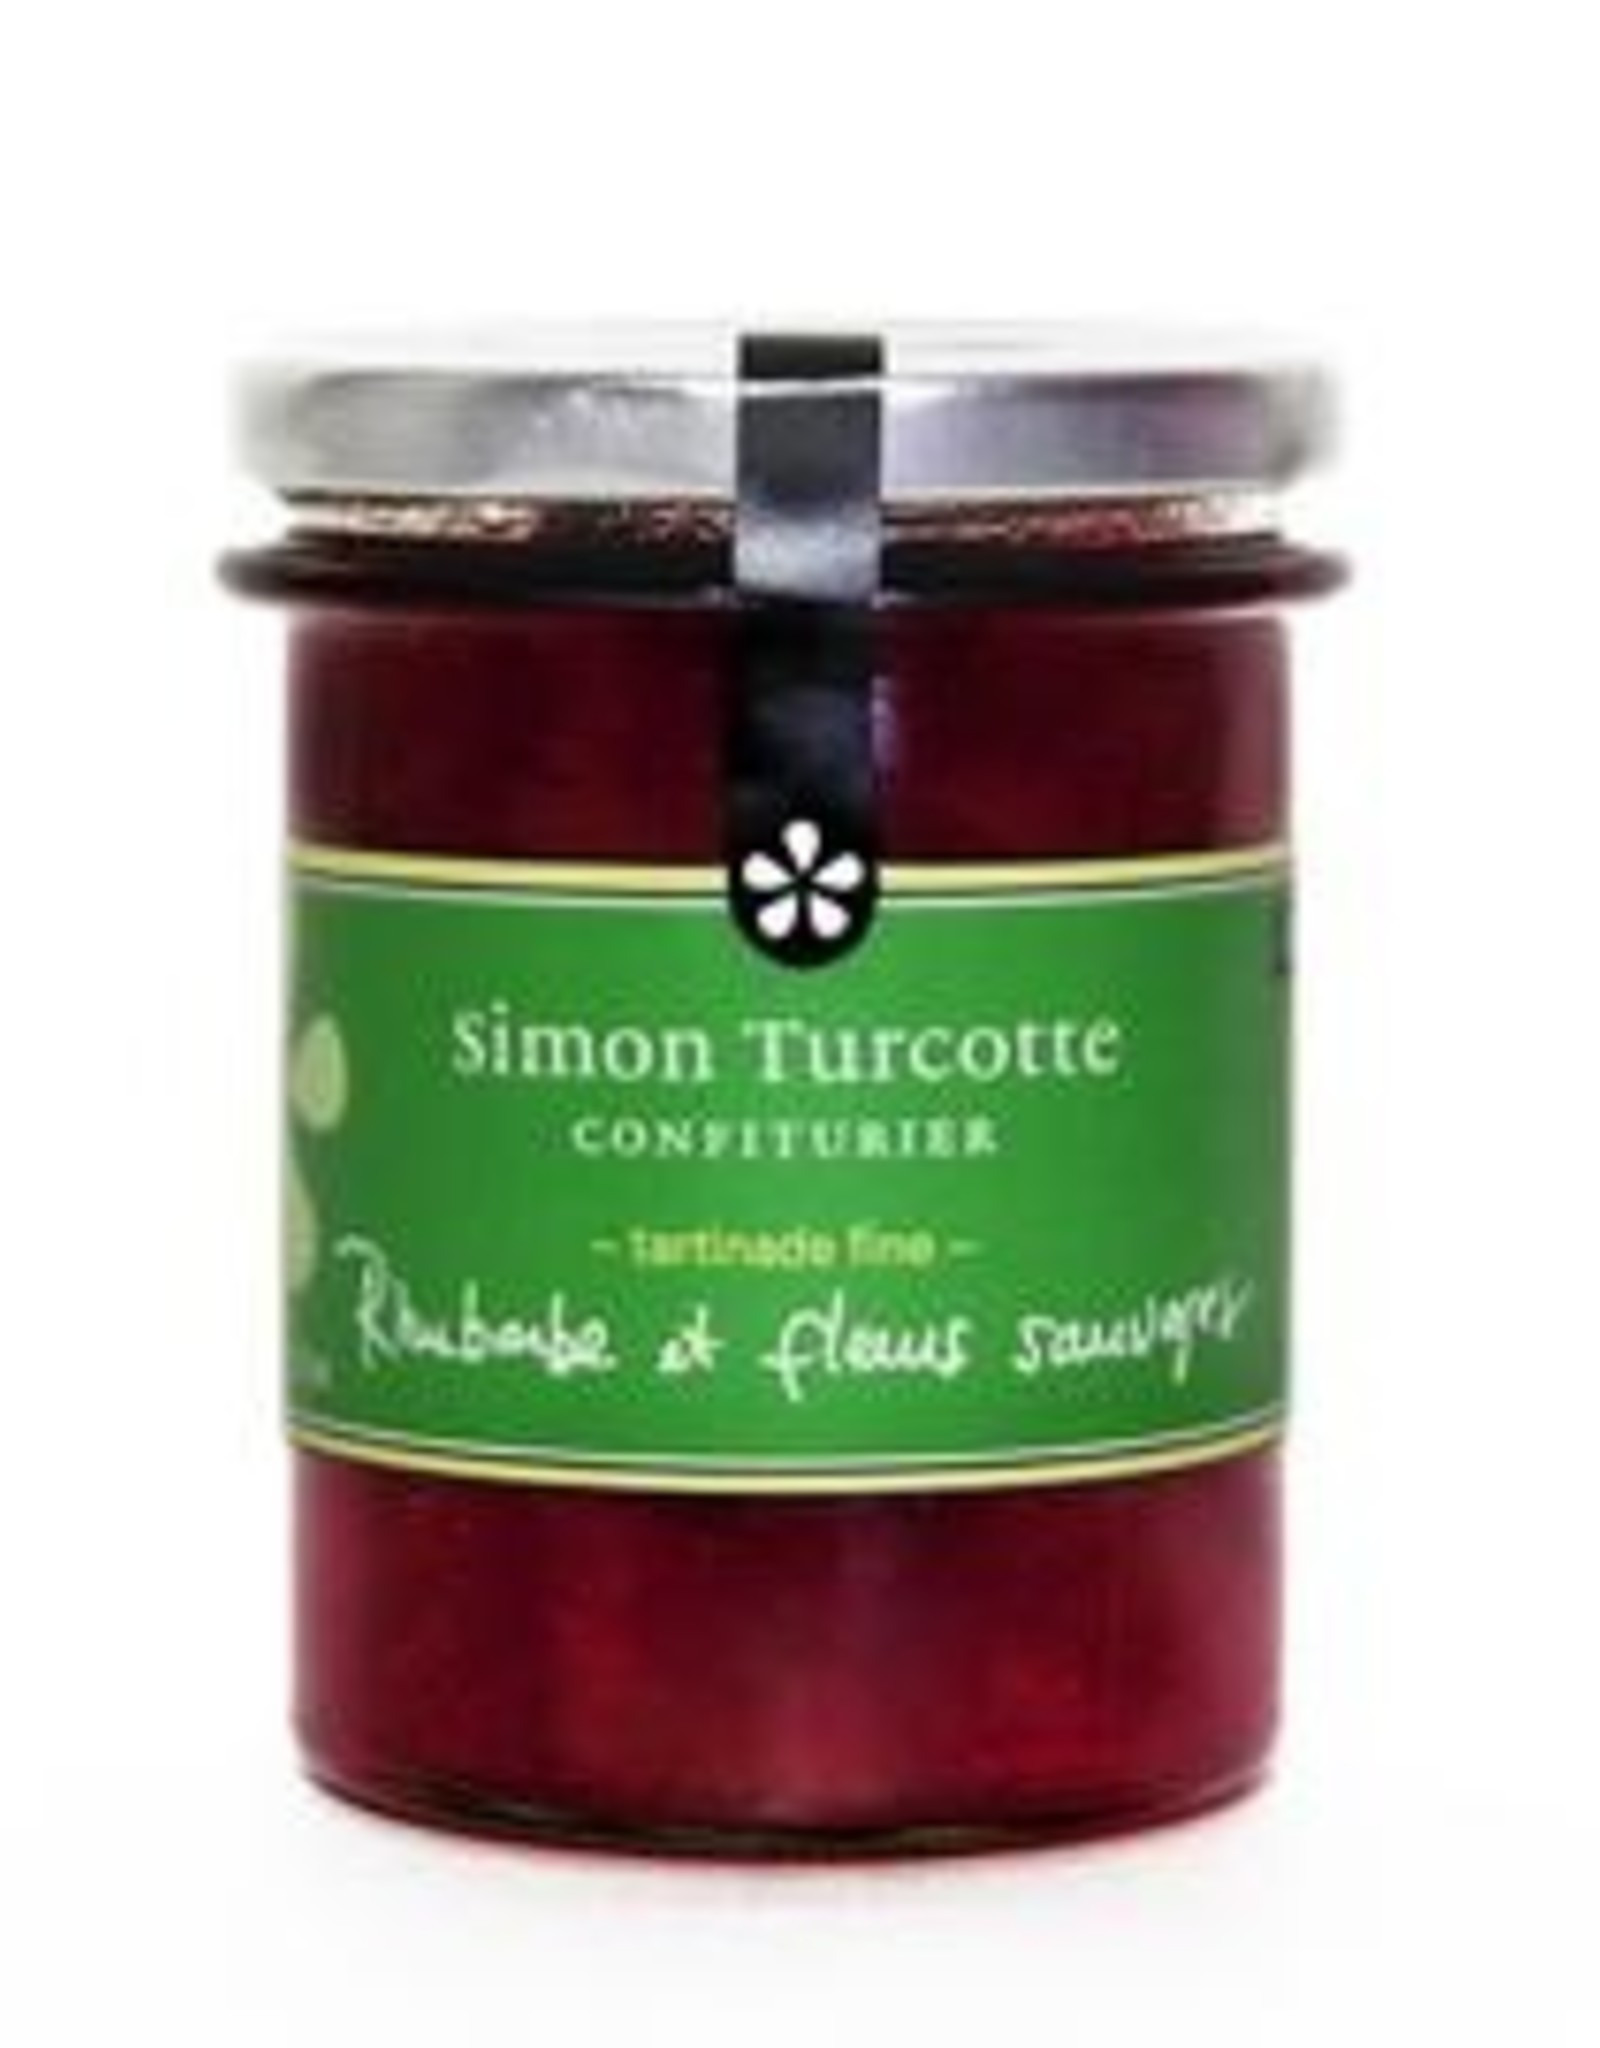 Simon Turcotte confiturier Tartinade Rhubarbe et fleurs sauvages